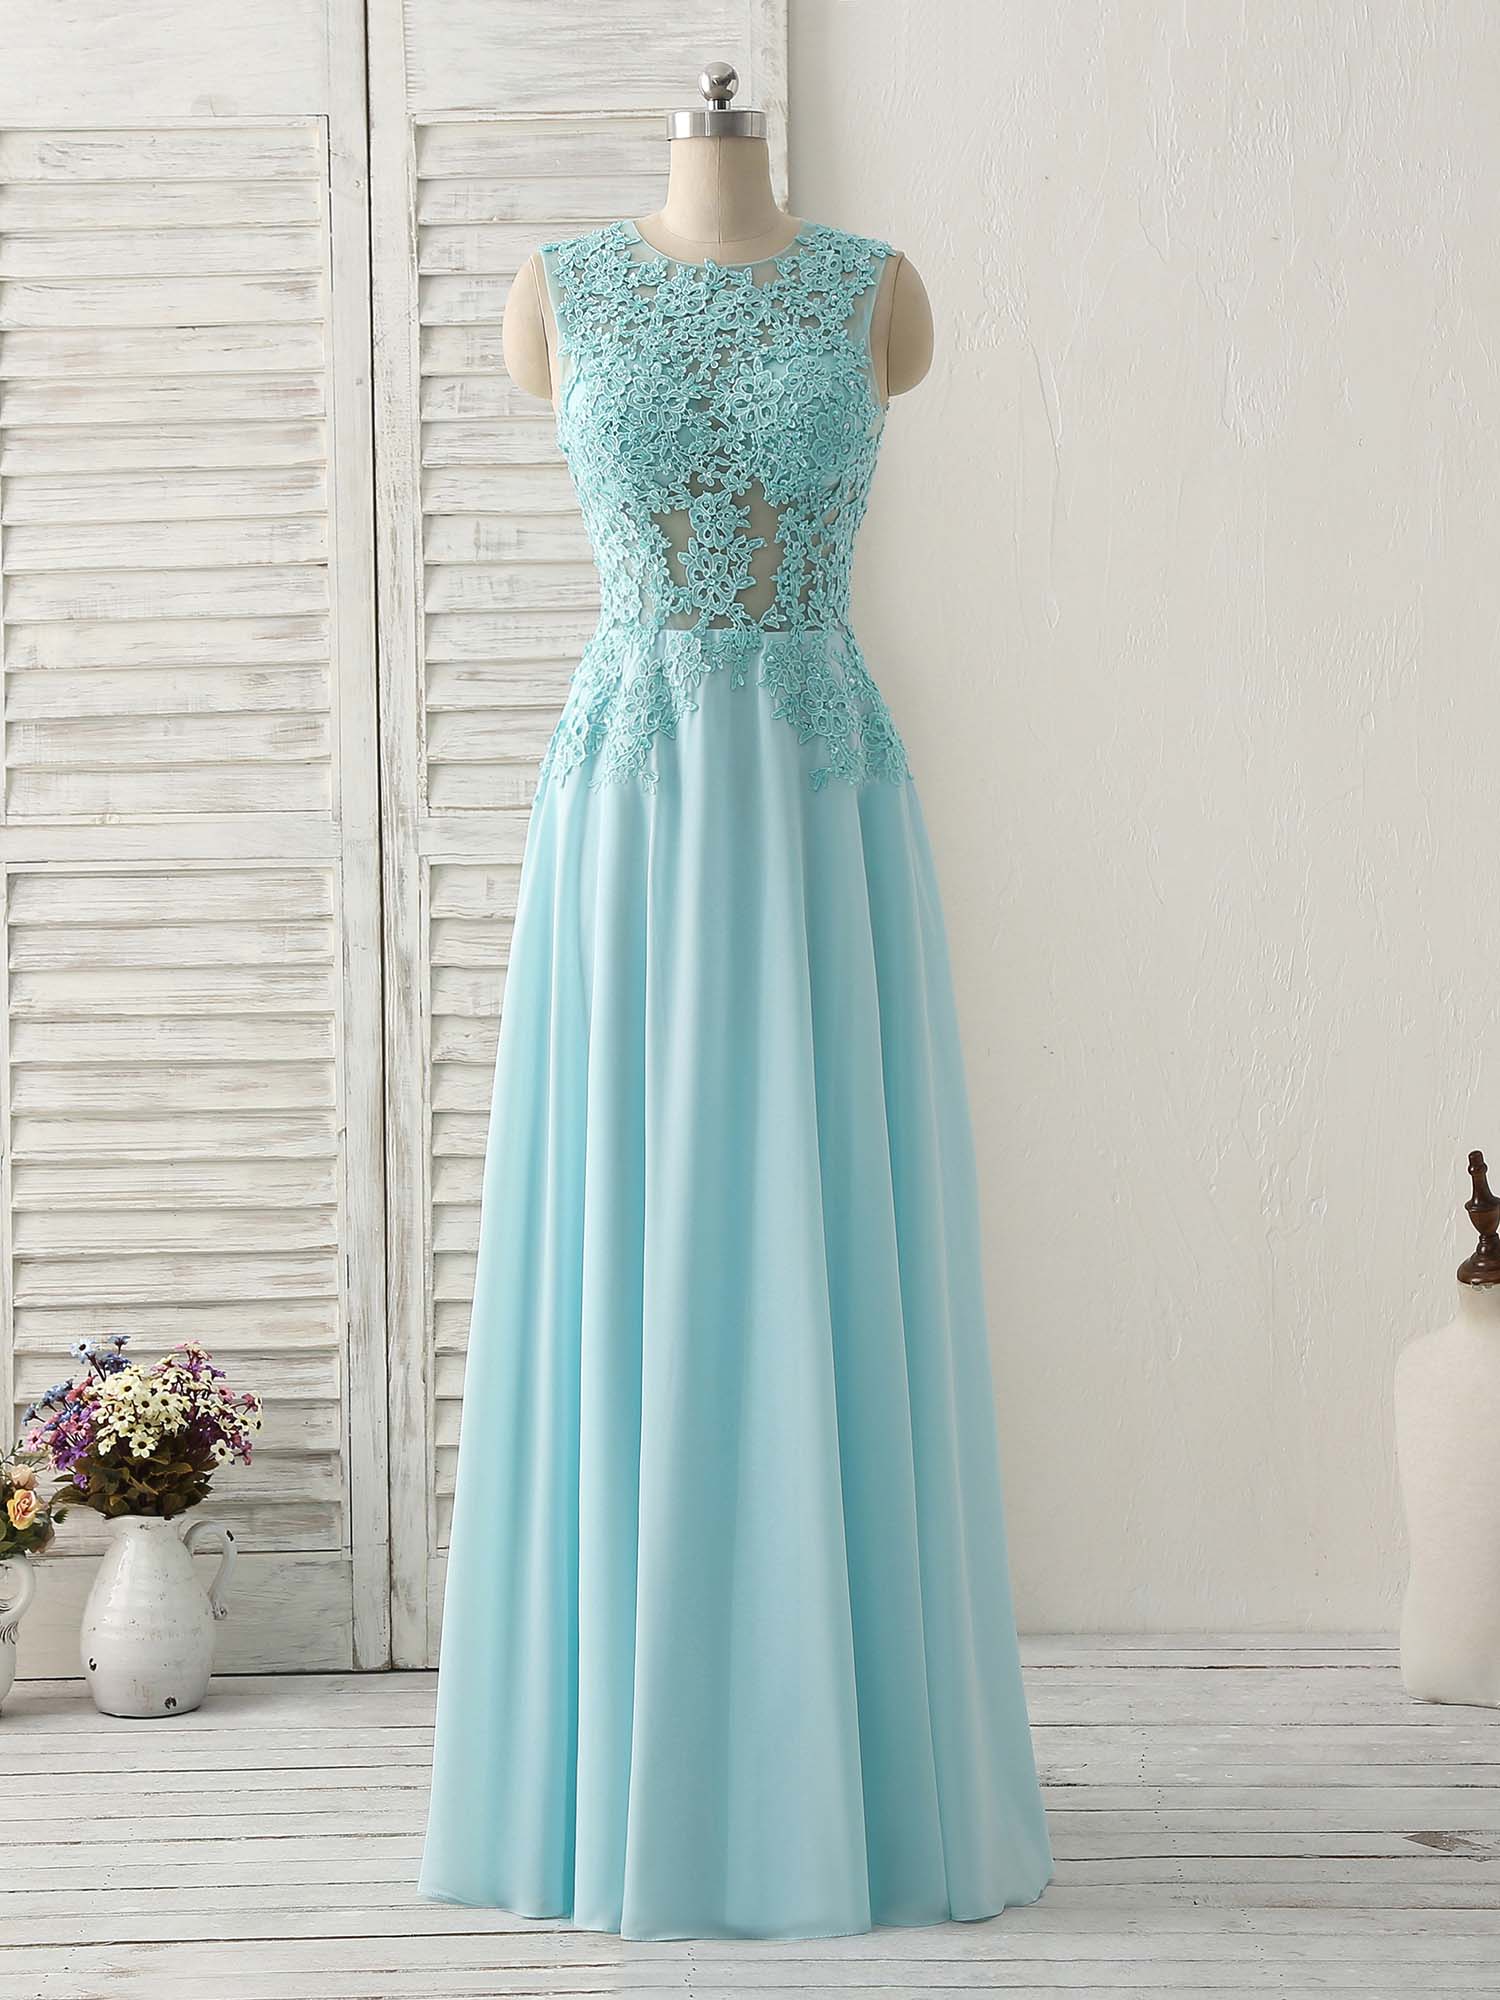 Blue Round Neck Lace Chiffon Long Corset Prom Dress, Blue Long Corset Formal Dresses outfit, Formal Dresses Long Sleeves